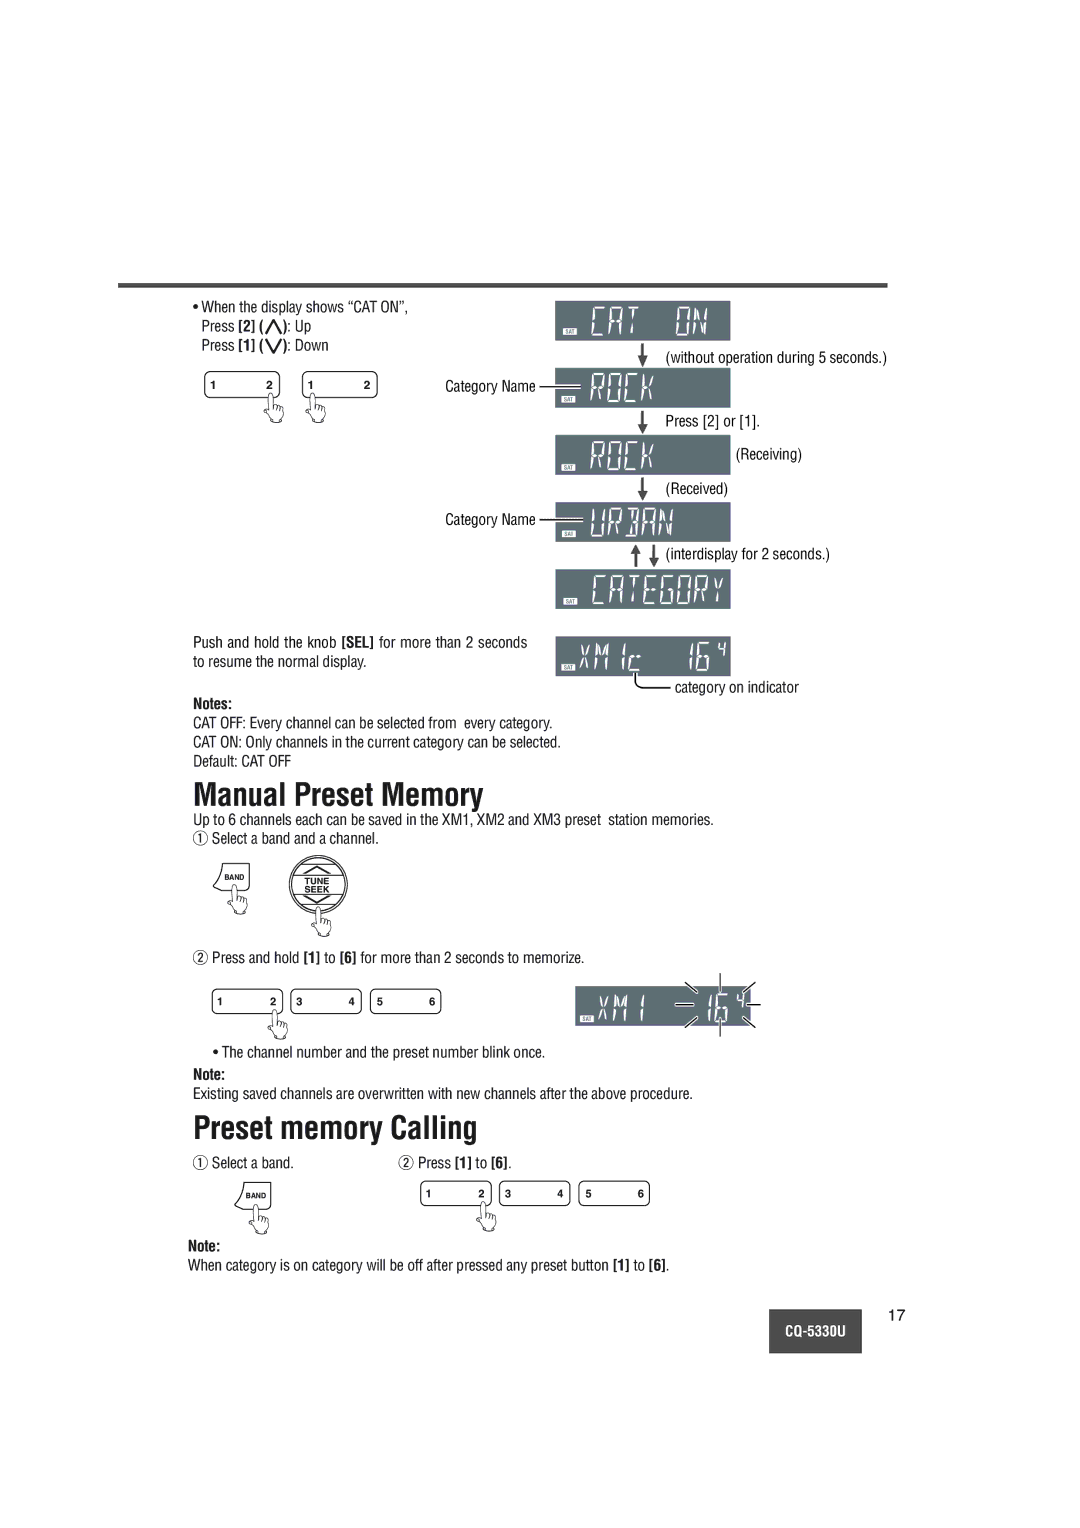 Panasonic CQ-5330U operating instructions Manual Preset Memory, Select a band Press 1 to 